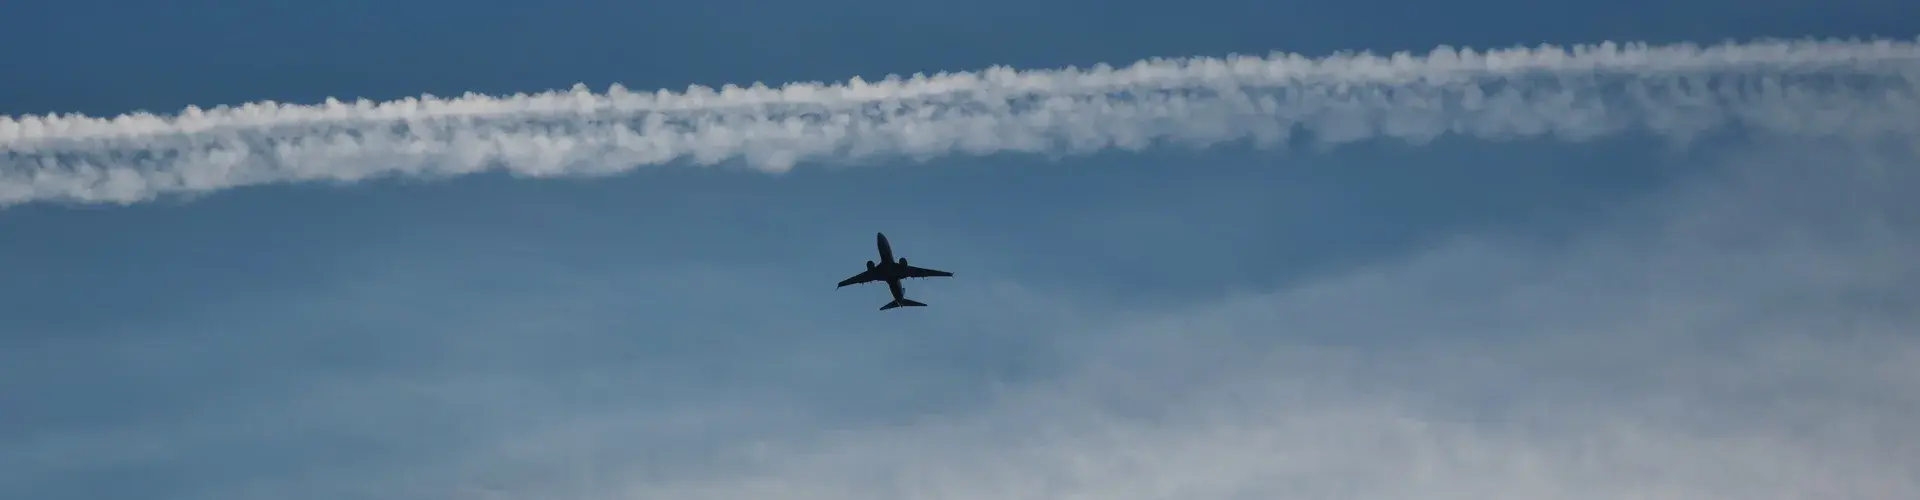 Airplane contrails (Credit: Plum Pine via Flickr)